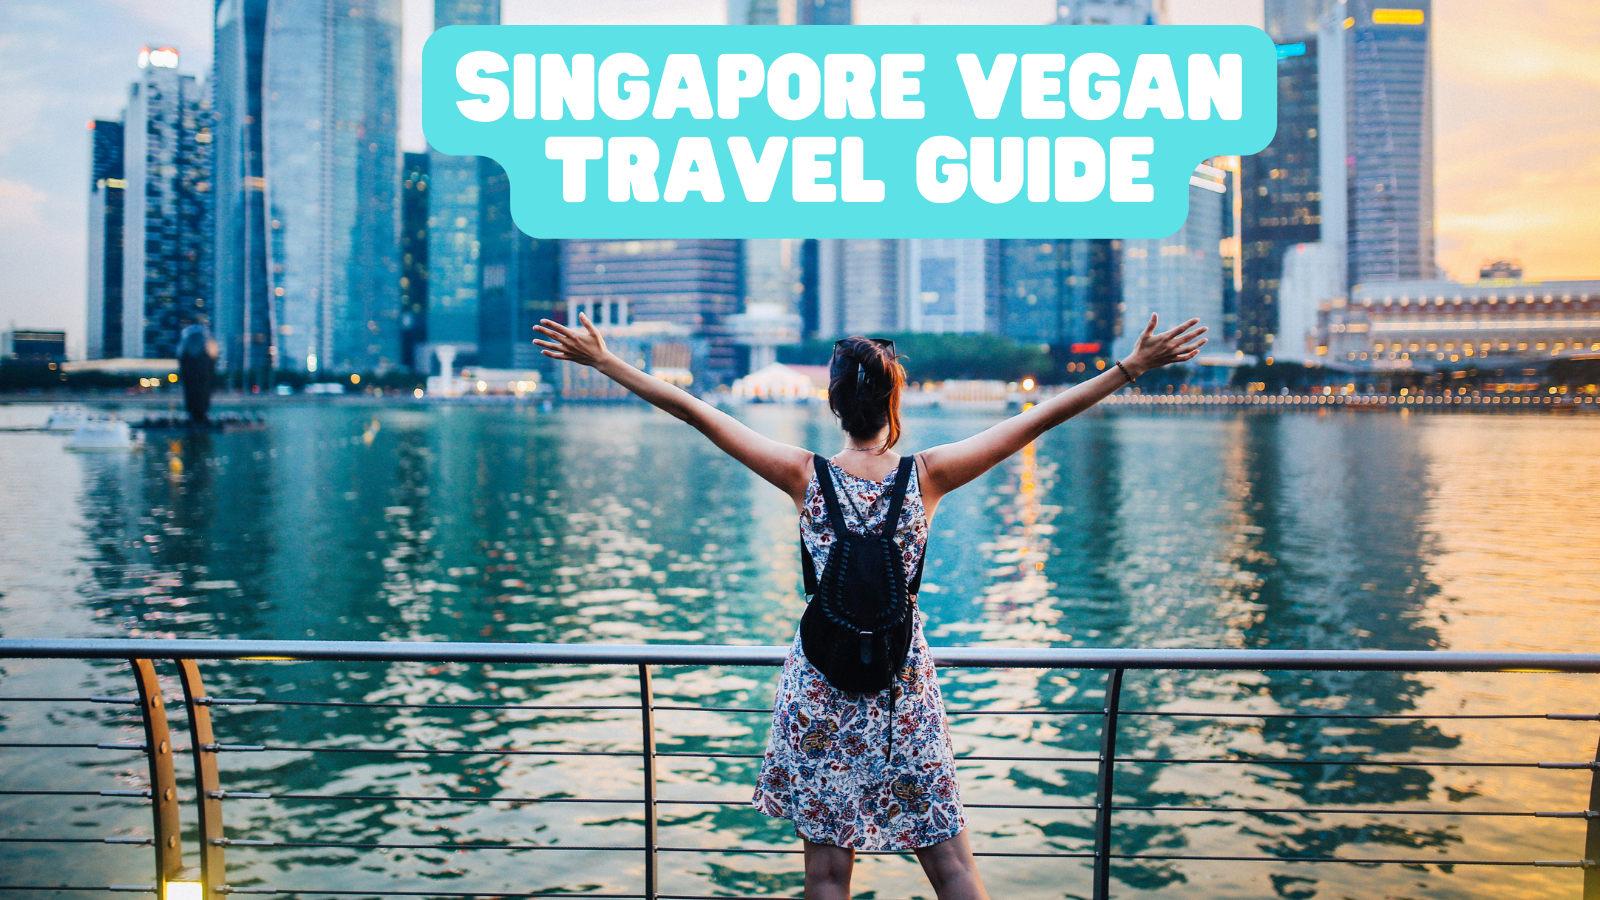 Singapore Vegan Travel Guide With Popular Vegan Restaurants